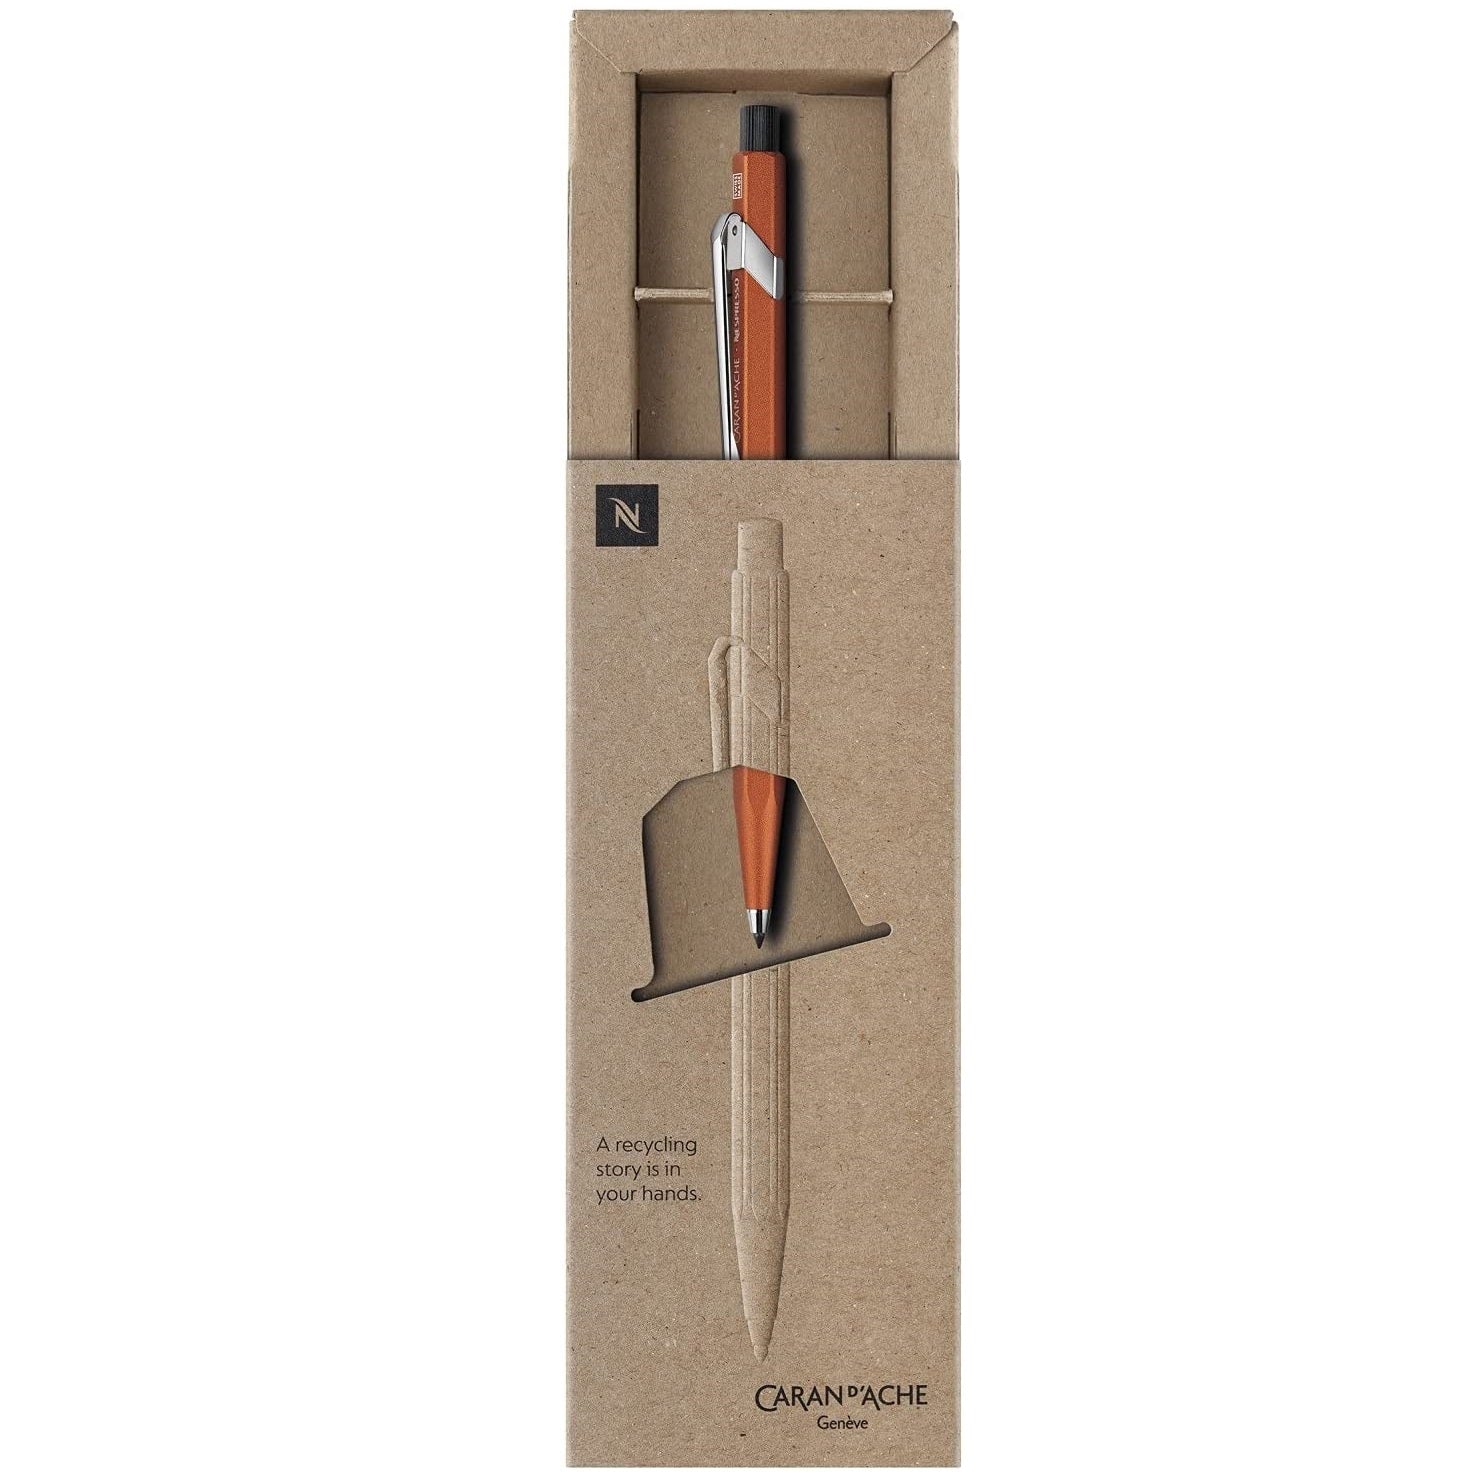 Caran d'Ache Nespresso Limited Edition 4 Pencils - Bertram's Inkwell